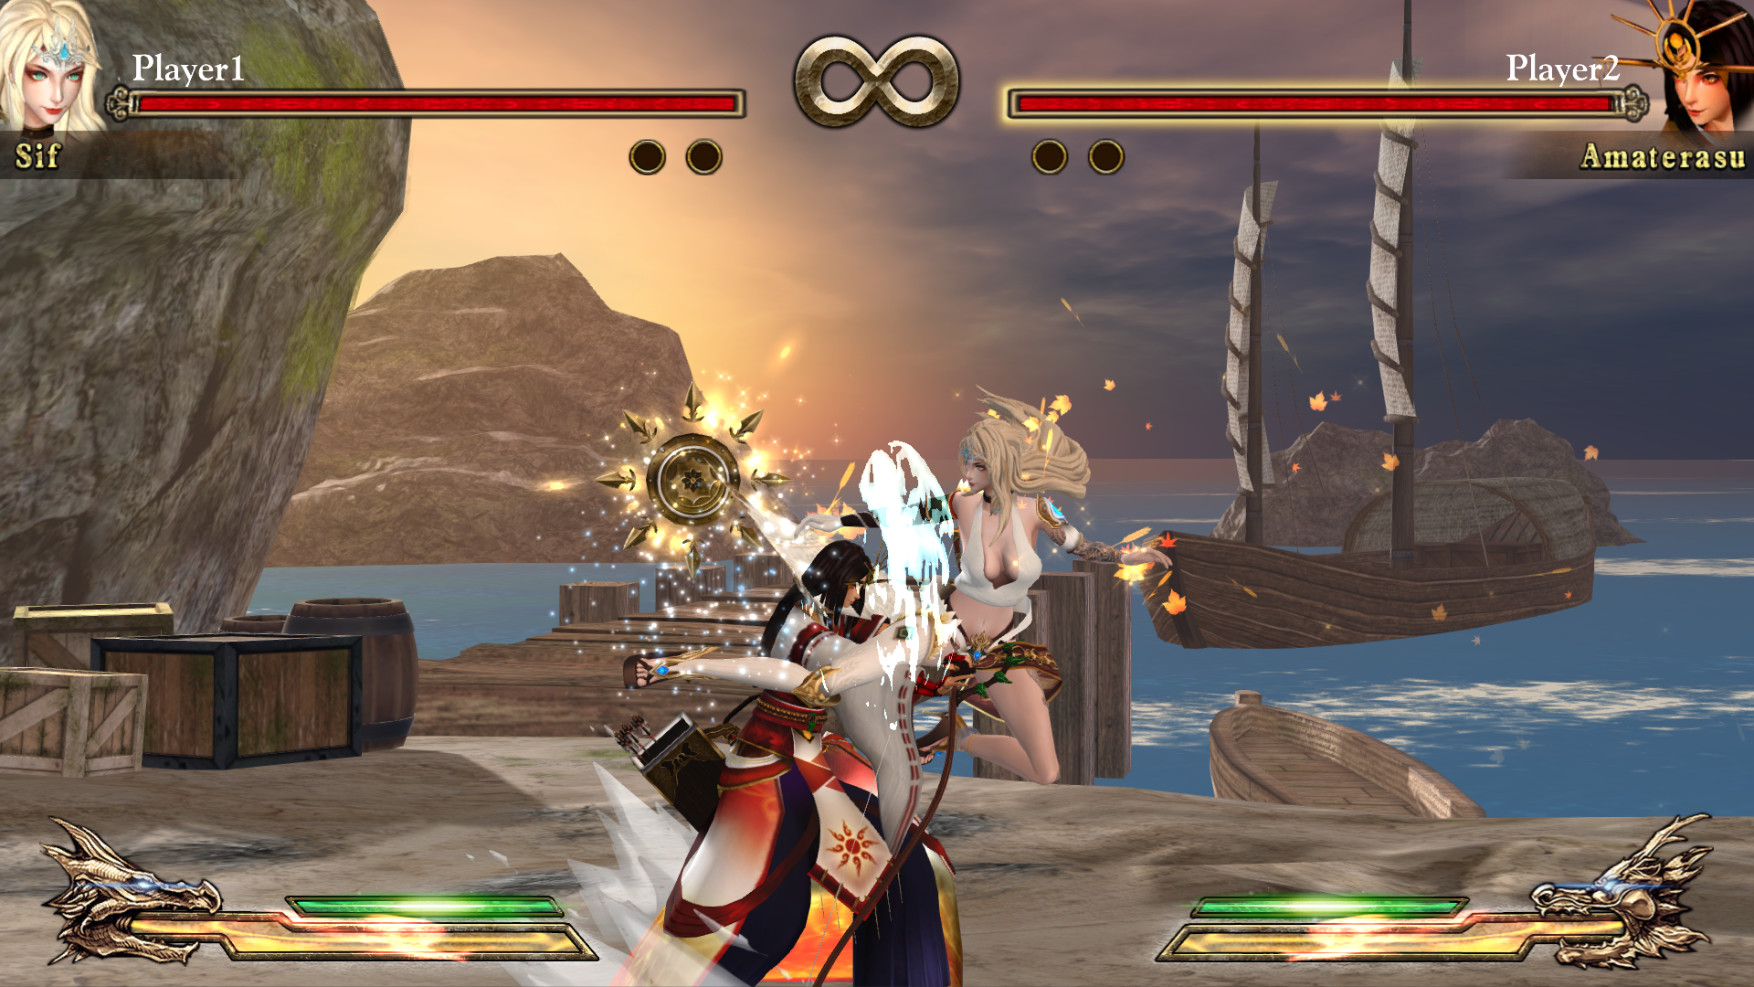 Скриншот Fight of Gods (PC)